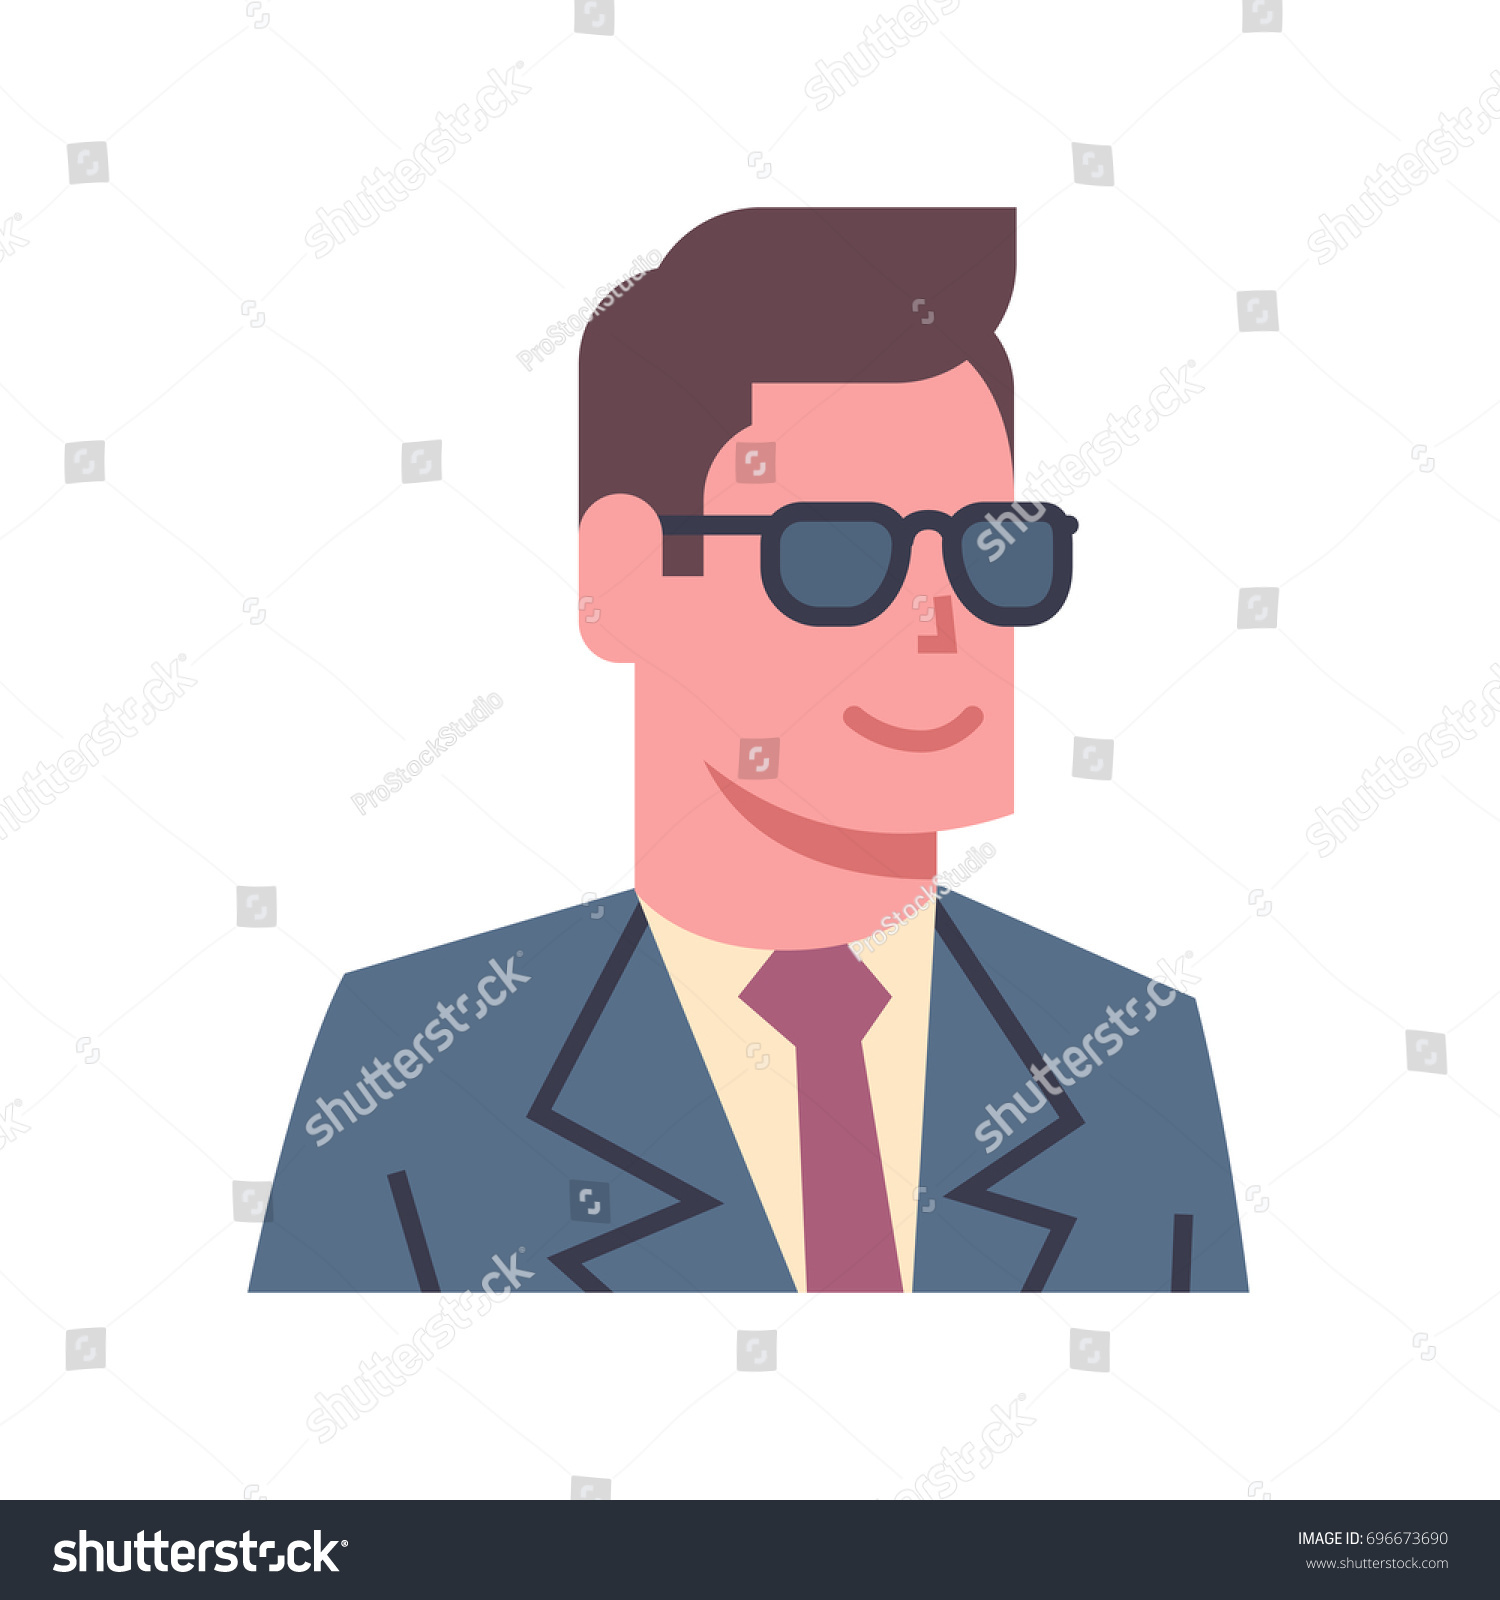 191 Cartoon white man wearing sun glasses Images, Stock Photos ...